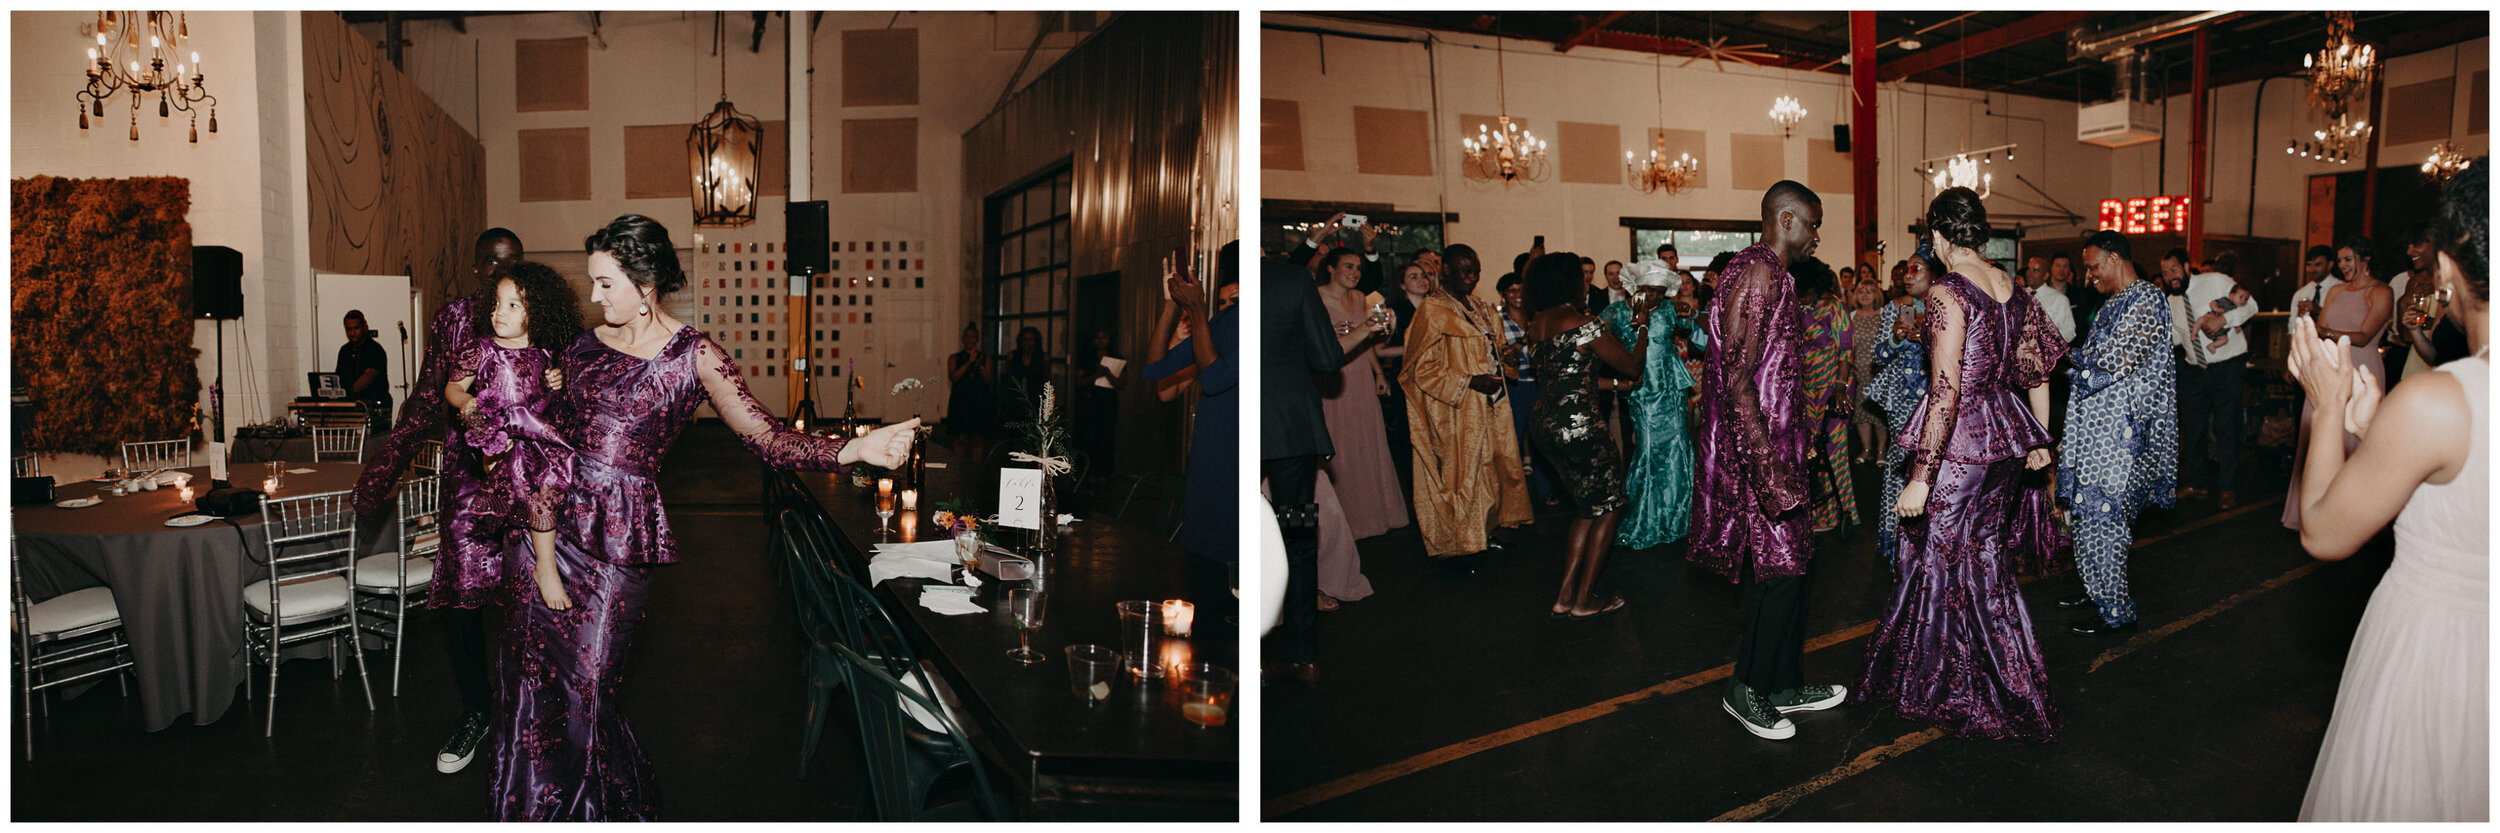 Monday Night Garage Wedding - Atlanta,Ga - Aline Marin Photography69.jpg